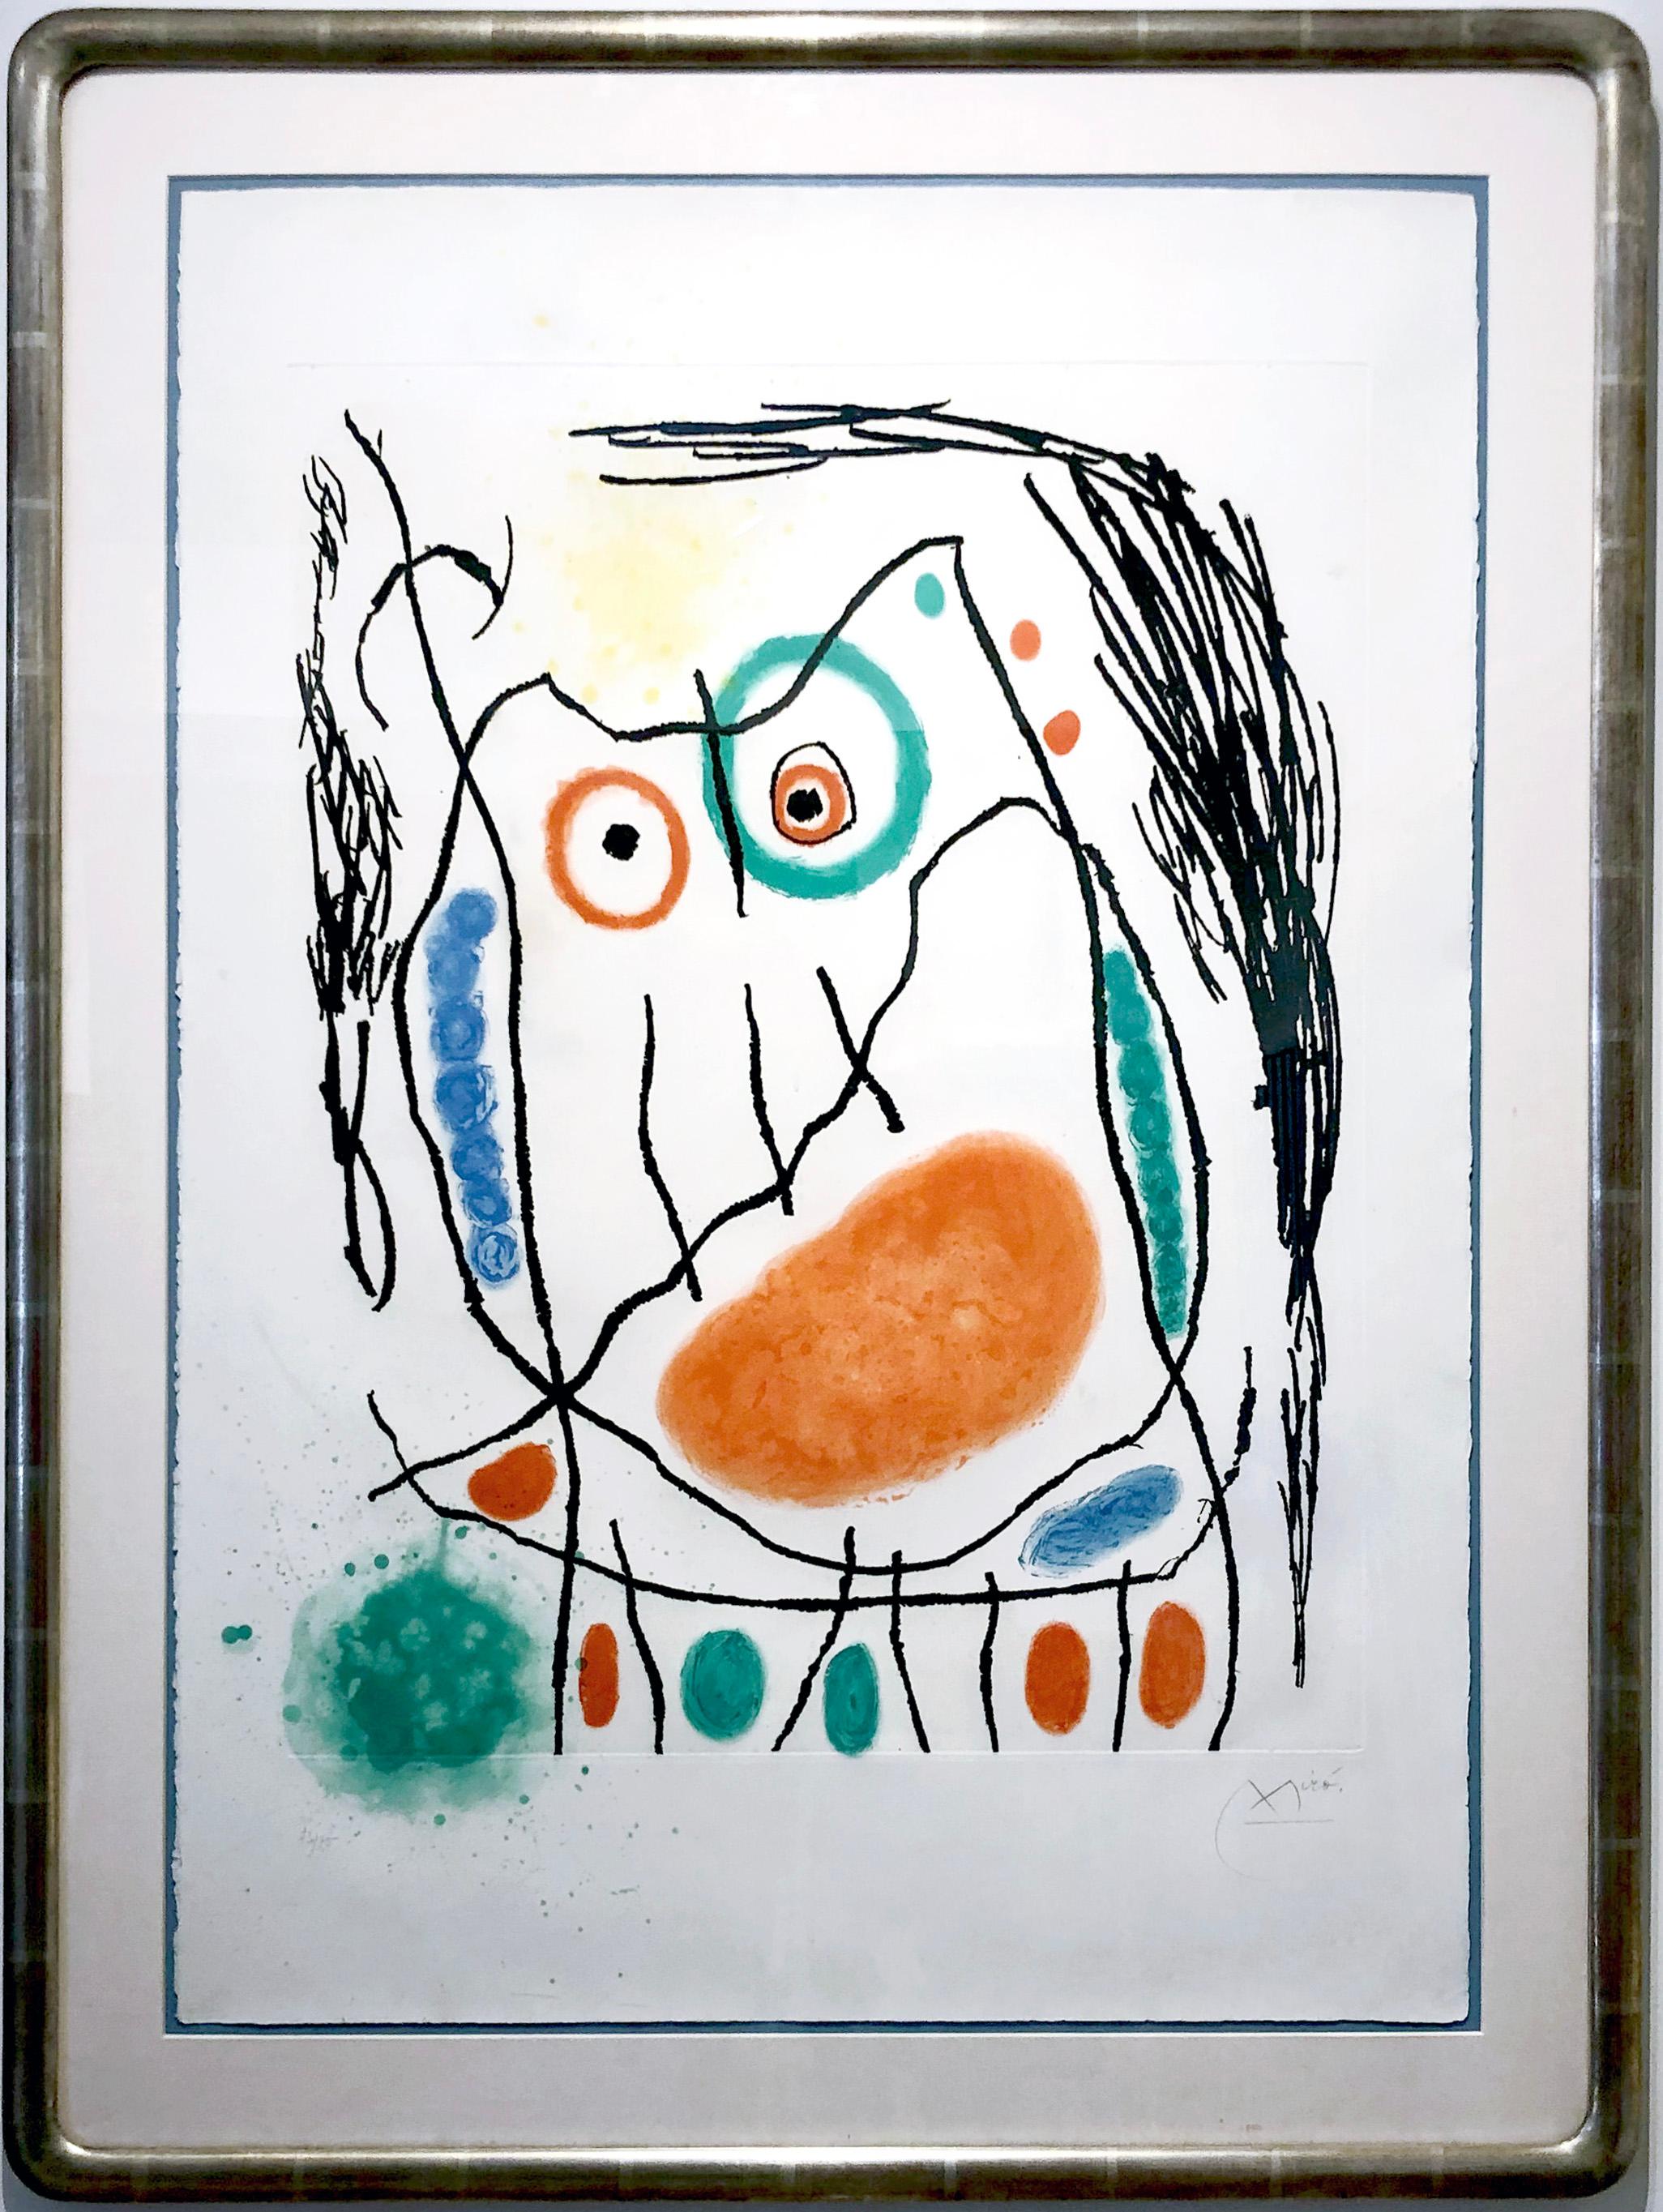 Le Grand Duc - Print by Joan Miró